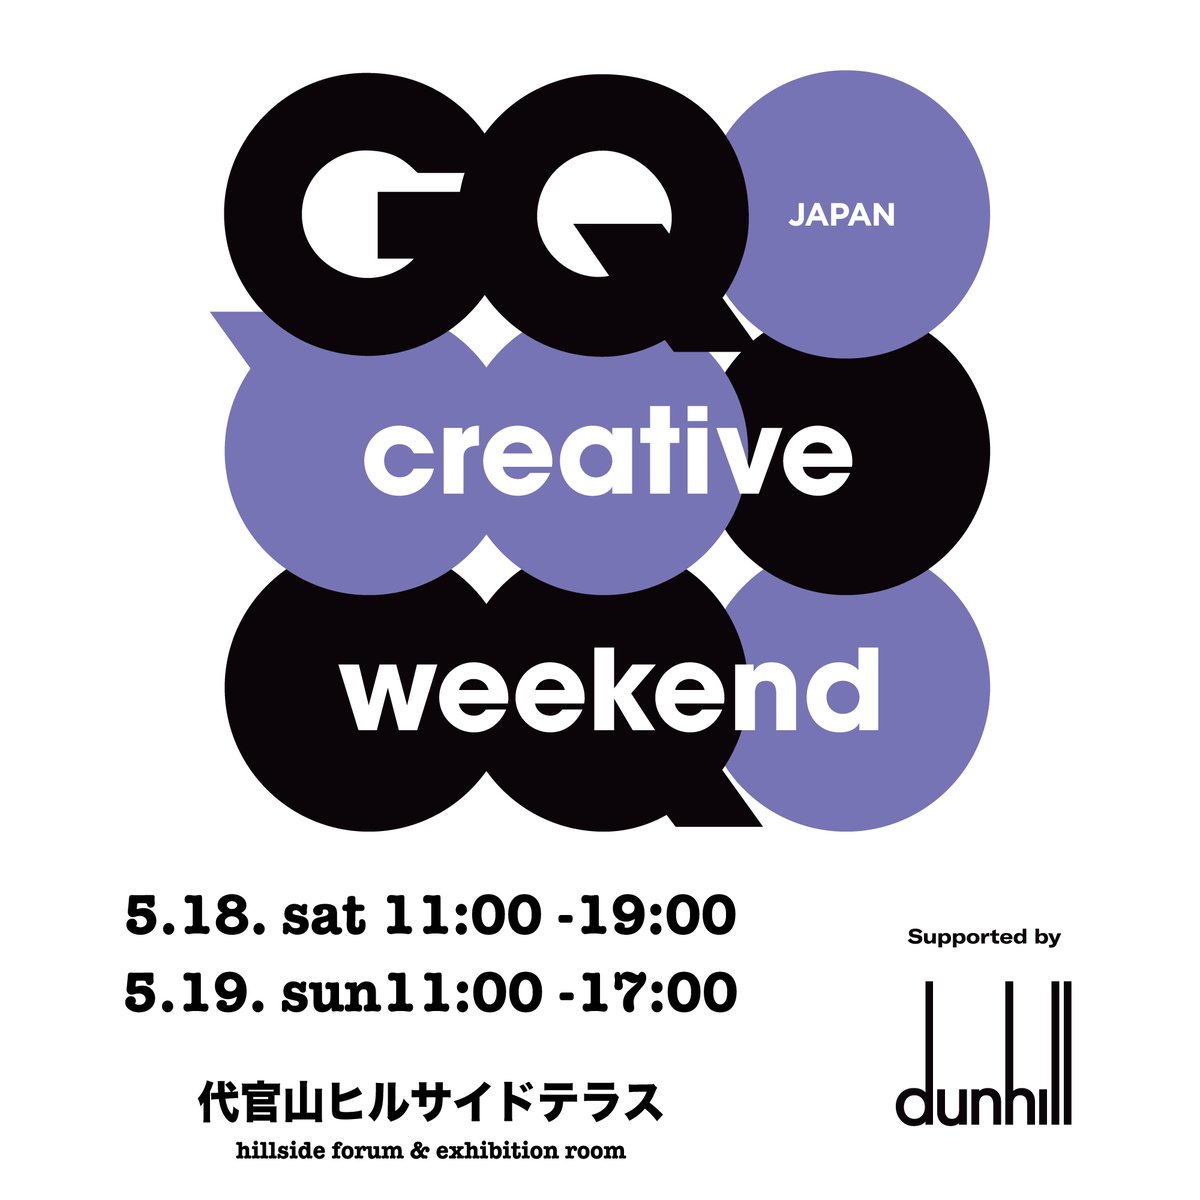 「GQ JAPAN Creative Weekend」のアンバサダーとして、俳優 #笠松将 が就任！

『GQ JAPAN』石田潤とのトークショーを開催予定。

▼本日4月29日締切！ 読者招待に応募する
trib.al/GzeMUBe

#GQCreativityAwards #GQJPCreativityAwards #GQJPCreativeWeekend #dunhill